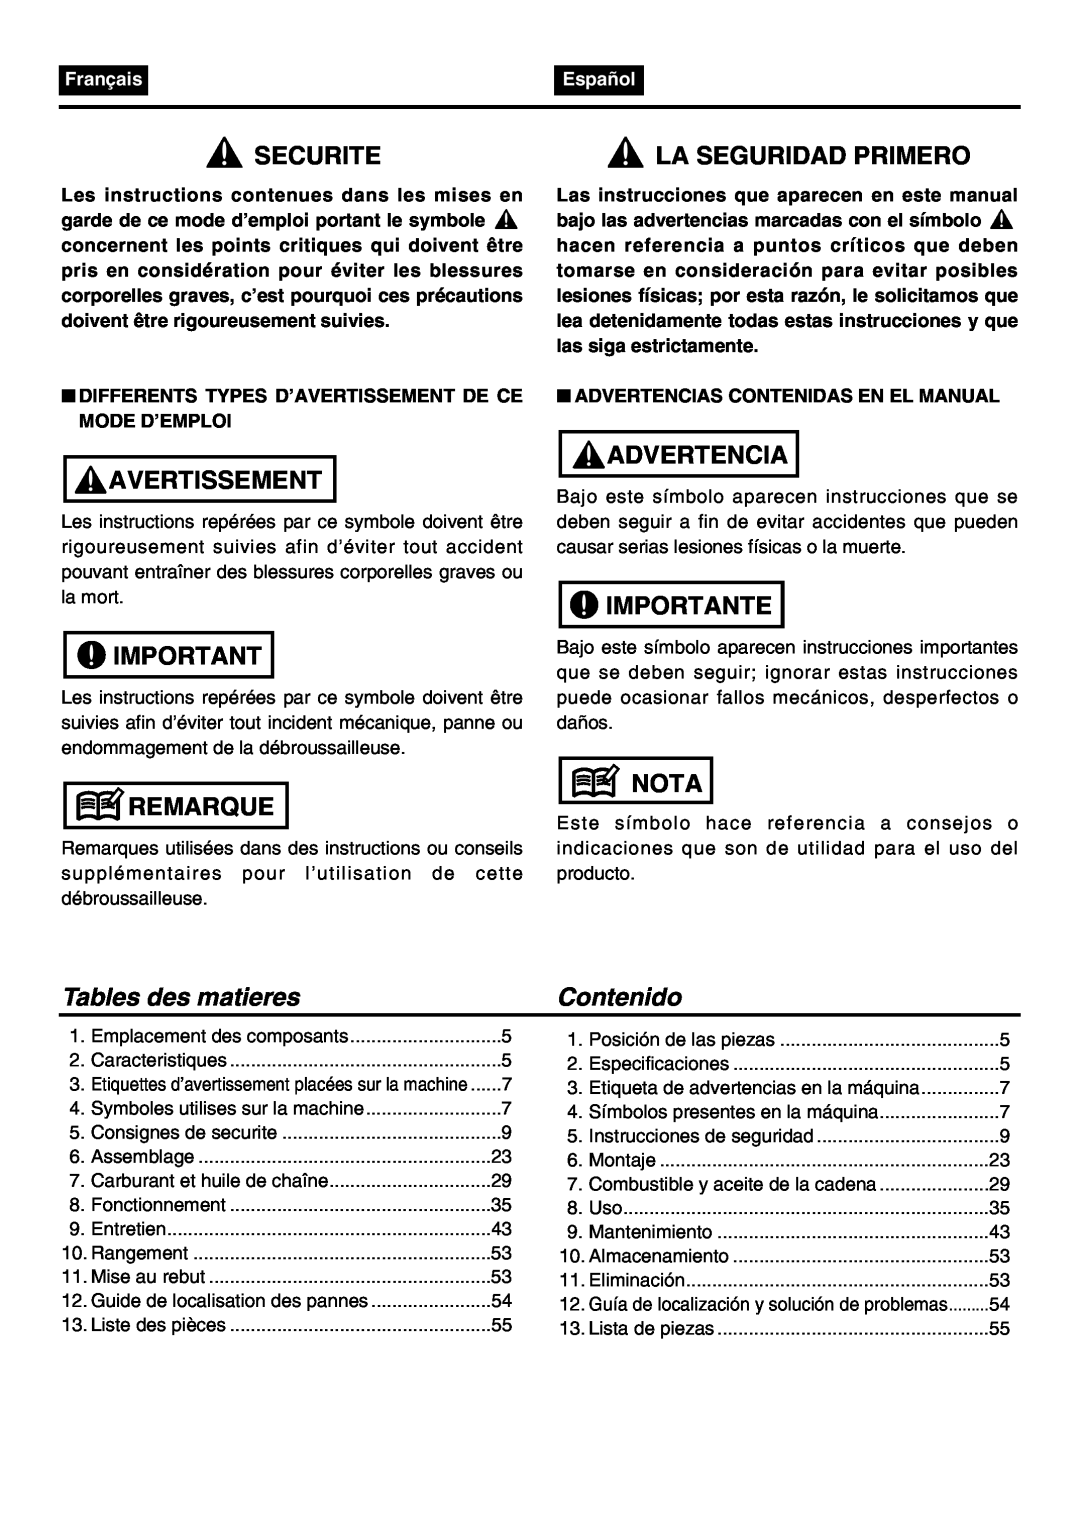 Zenoah PSZ2401 manual Securite, Avertissement, Remarque, Advertencia, Importante, Nota, Tables des matieres, Contenido 